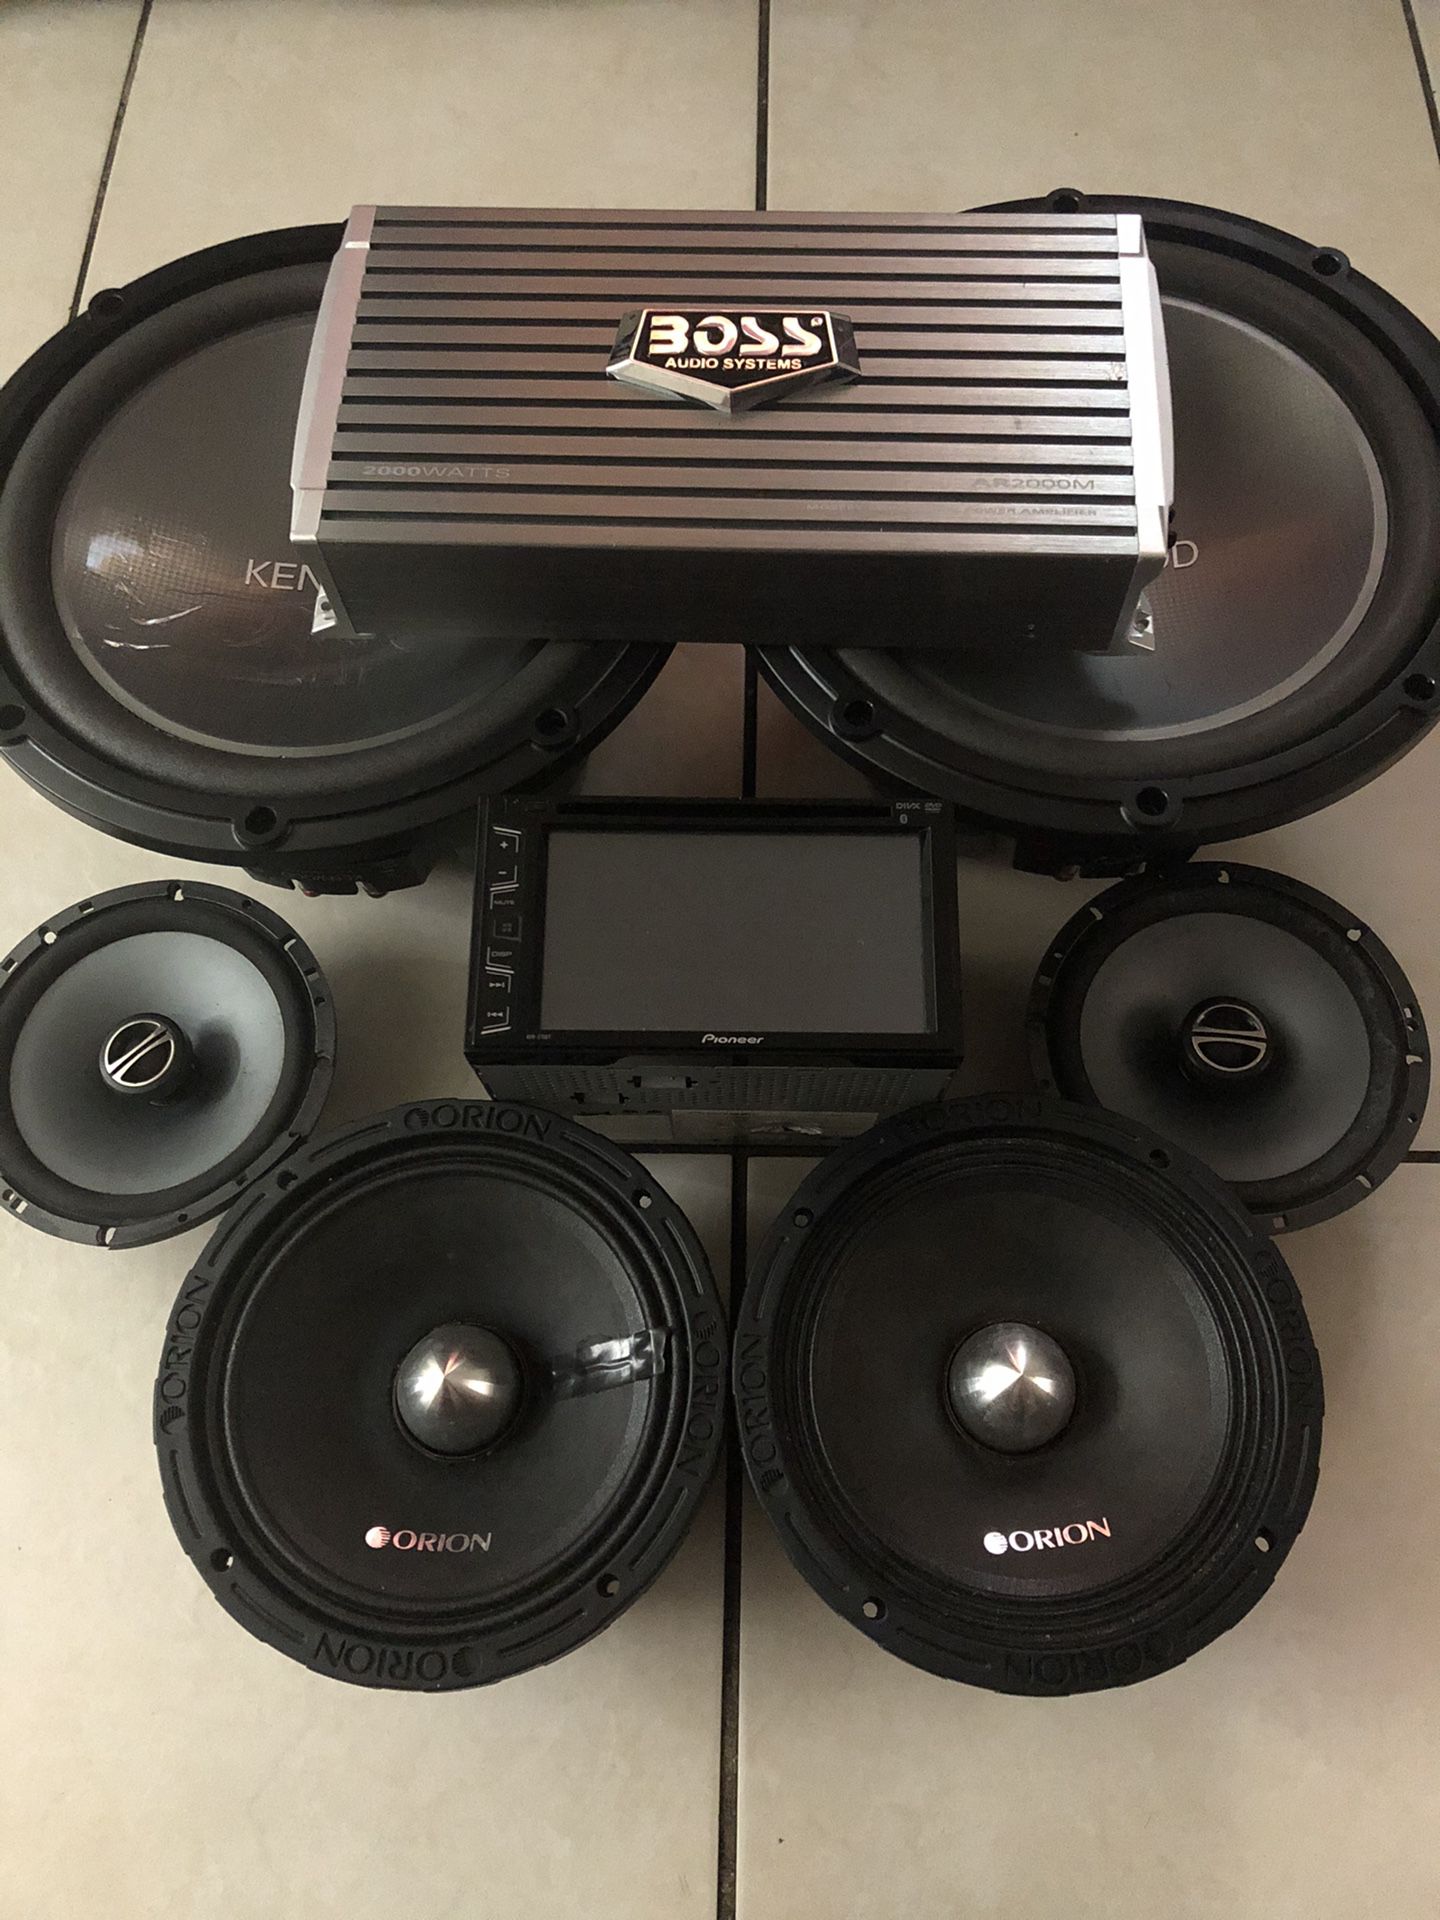 Kenwood 12” loud speakers 1200 watts max,Orion 8” midrange loud speakers 1600 watts max, Alpine 200 watts speakers a pioneer touchscreen radio 7” and